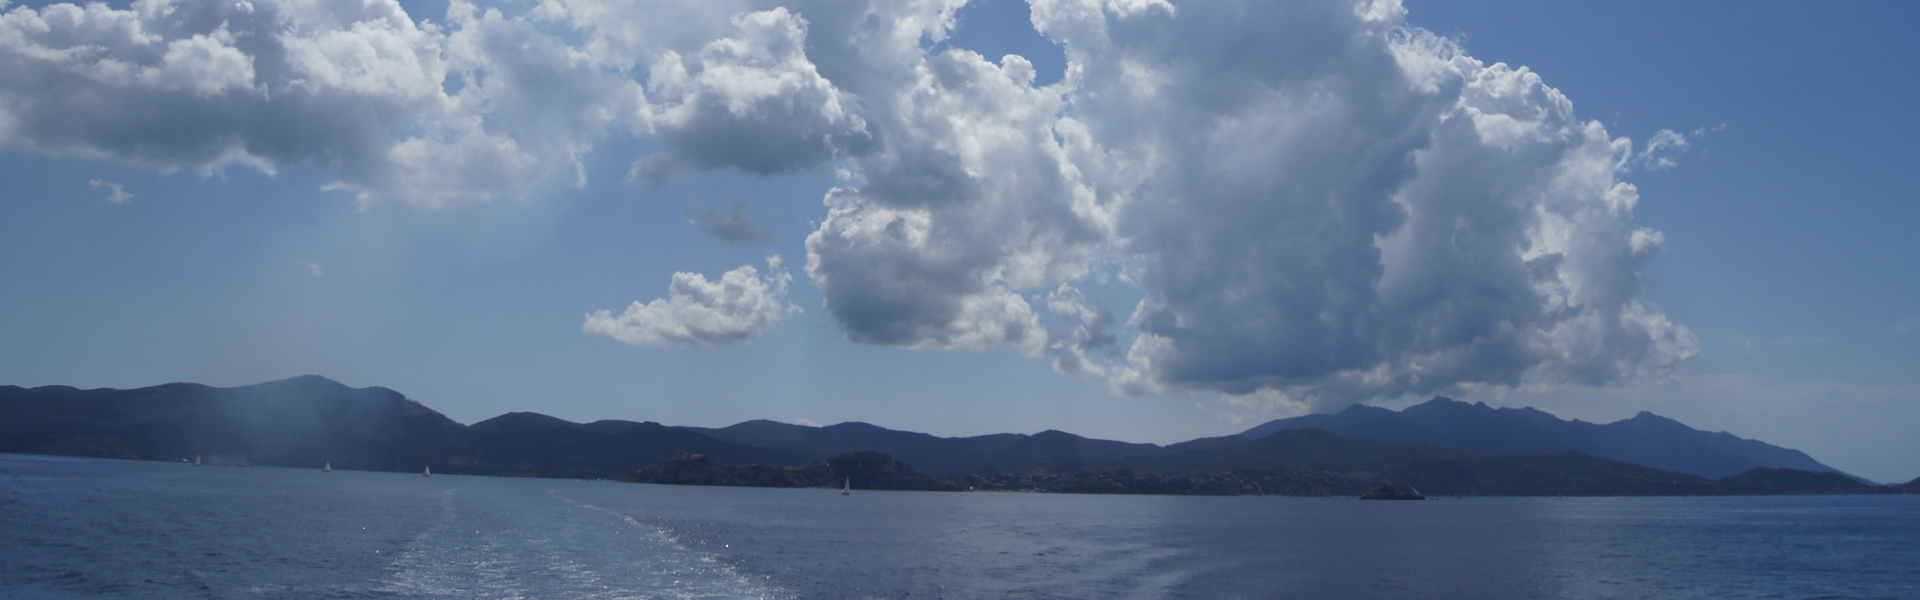 Isola d'Elba affitti, traghetti, rent, scuola di vela